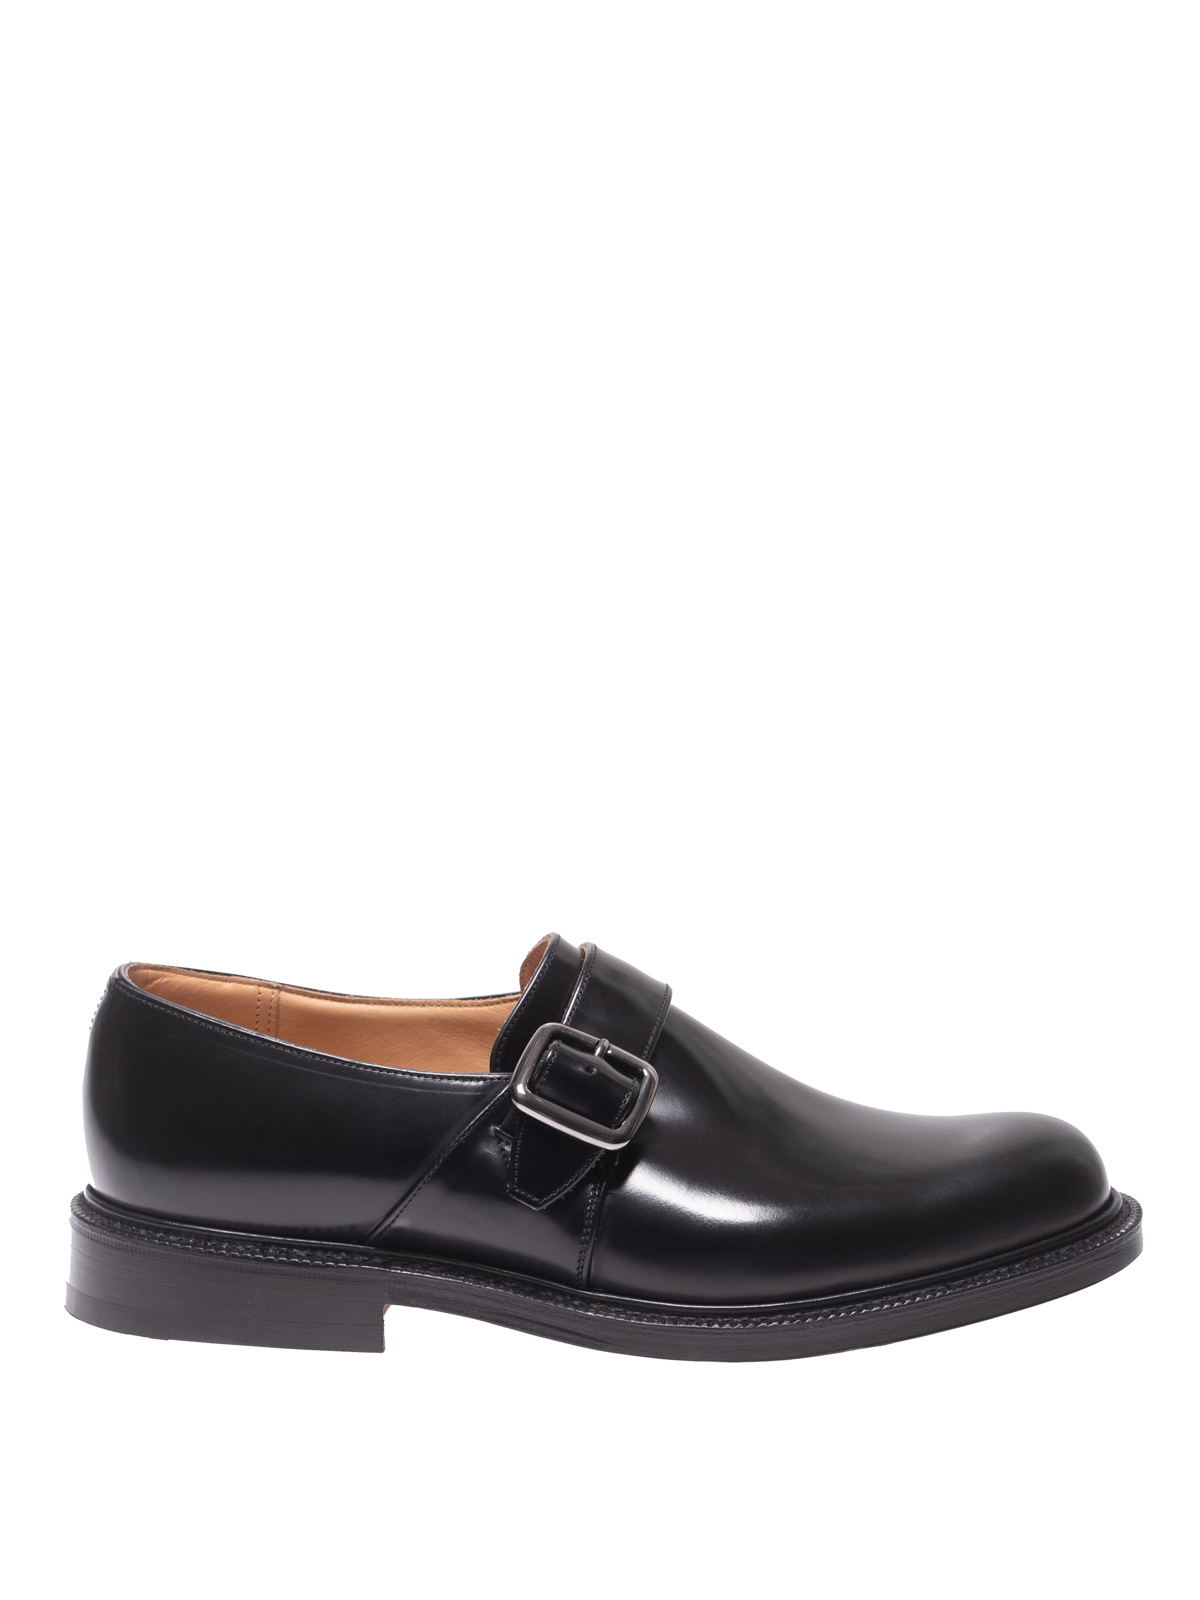 Church's - Wrexham black polish binder monk strap shoes - classic shoes ...